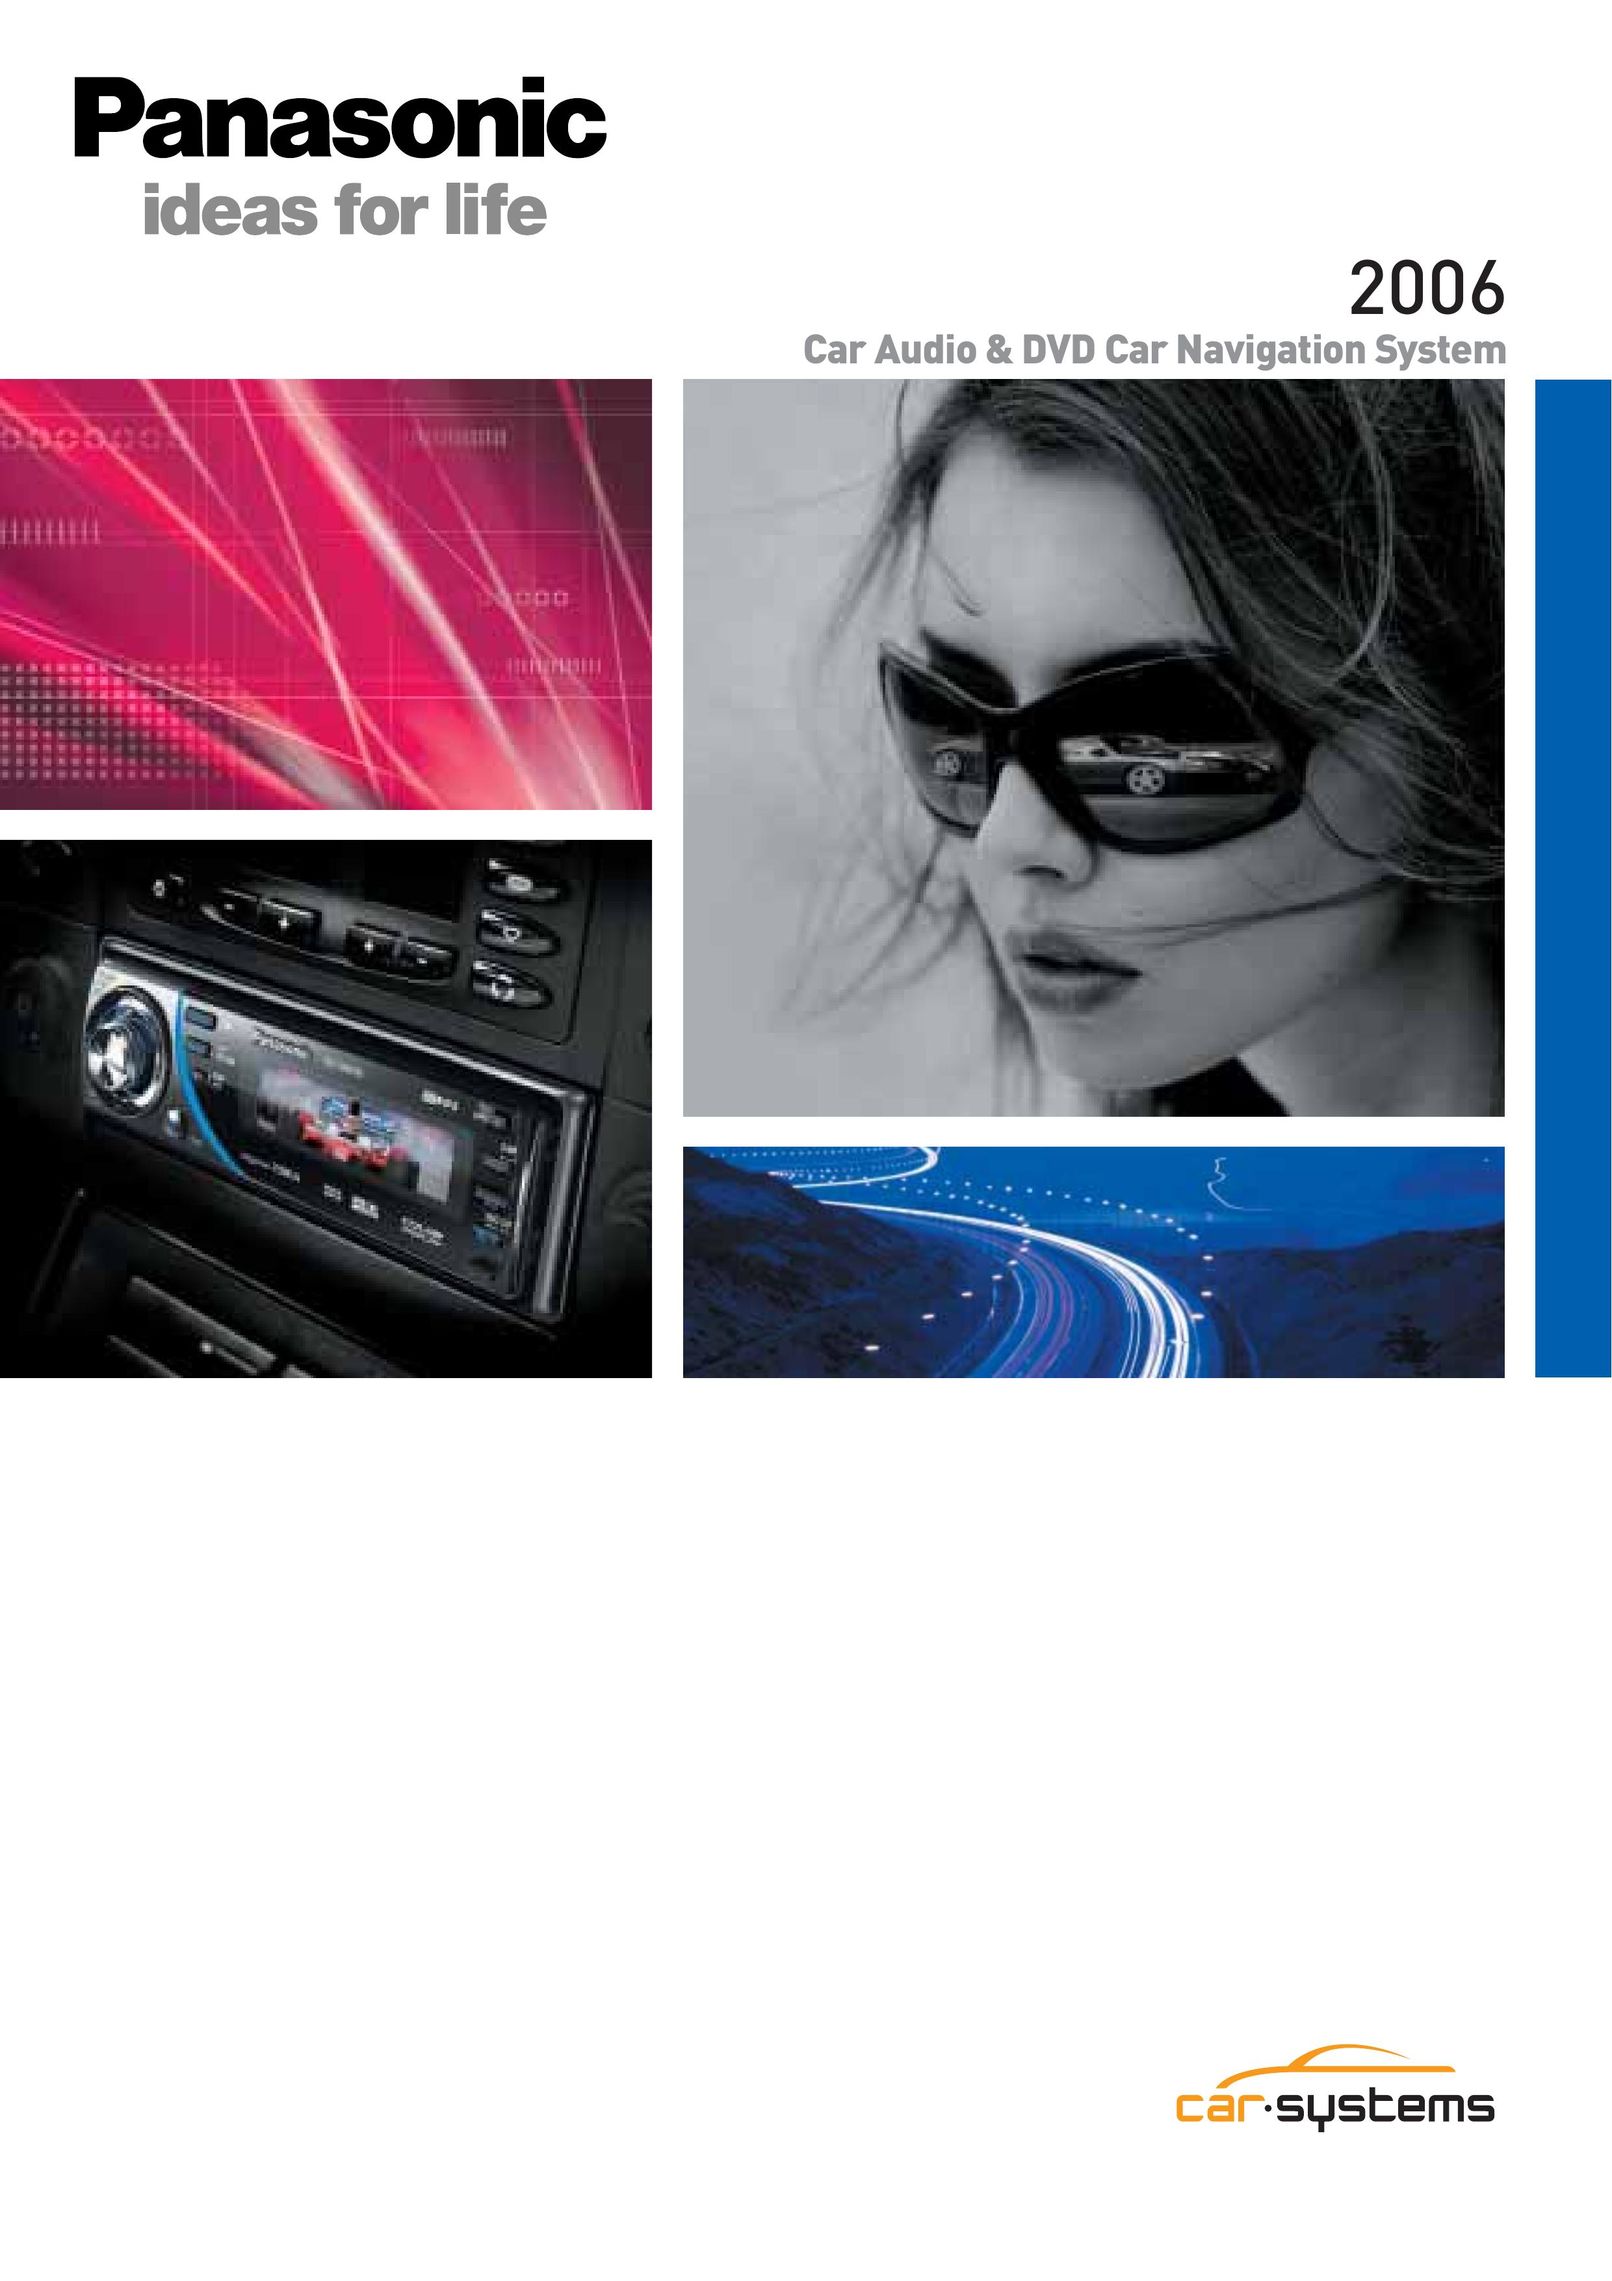 Panasonic Car Audio & DVD Car Navigation System Car Stereo System User Manual